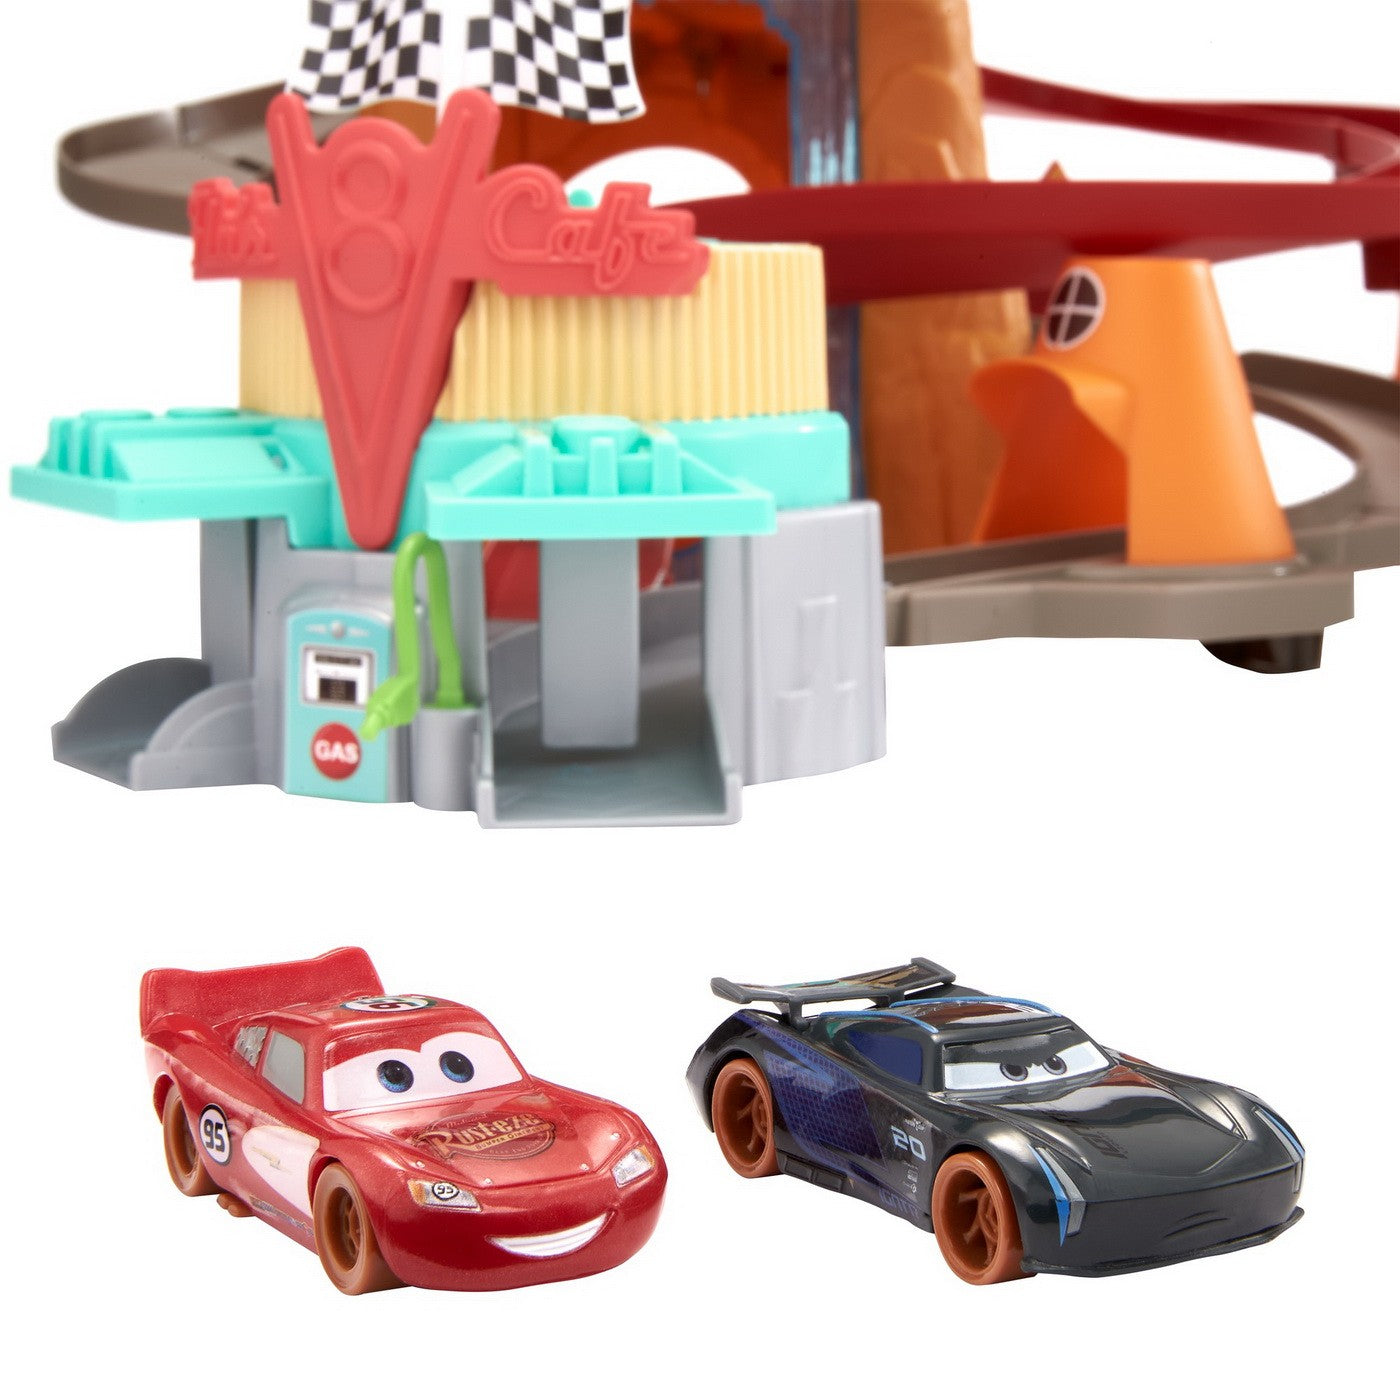 Set de joaca Disney Cars - Cursa montana Pista Radiator